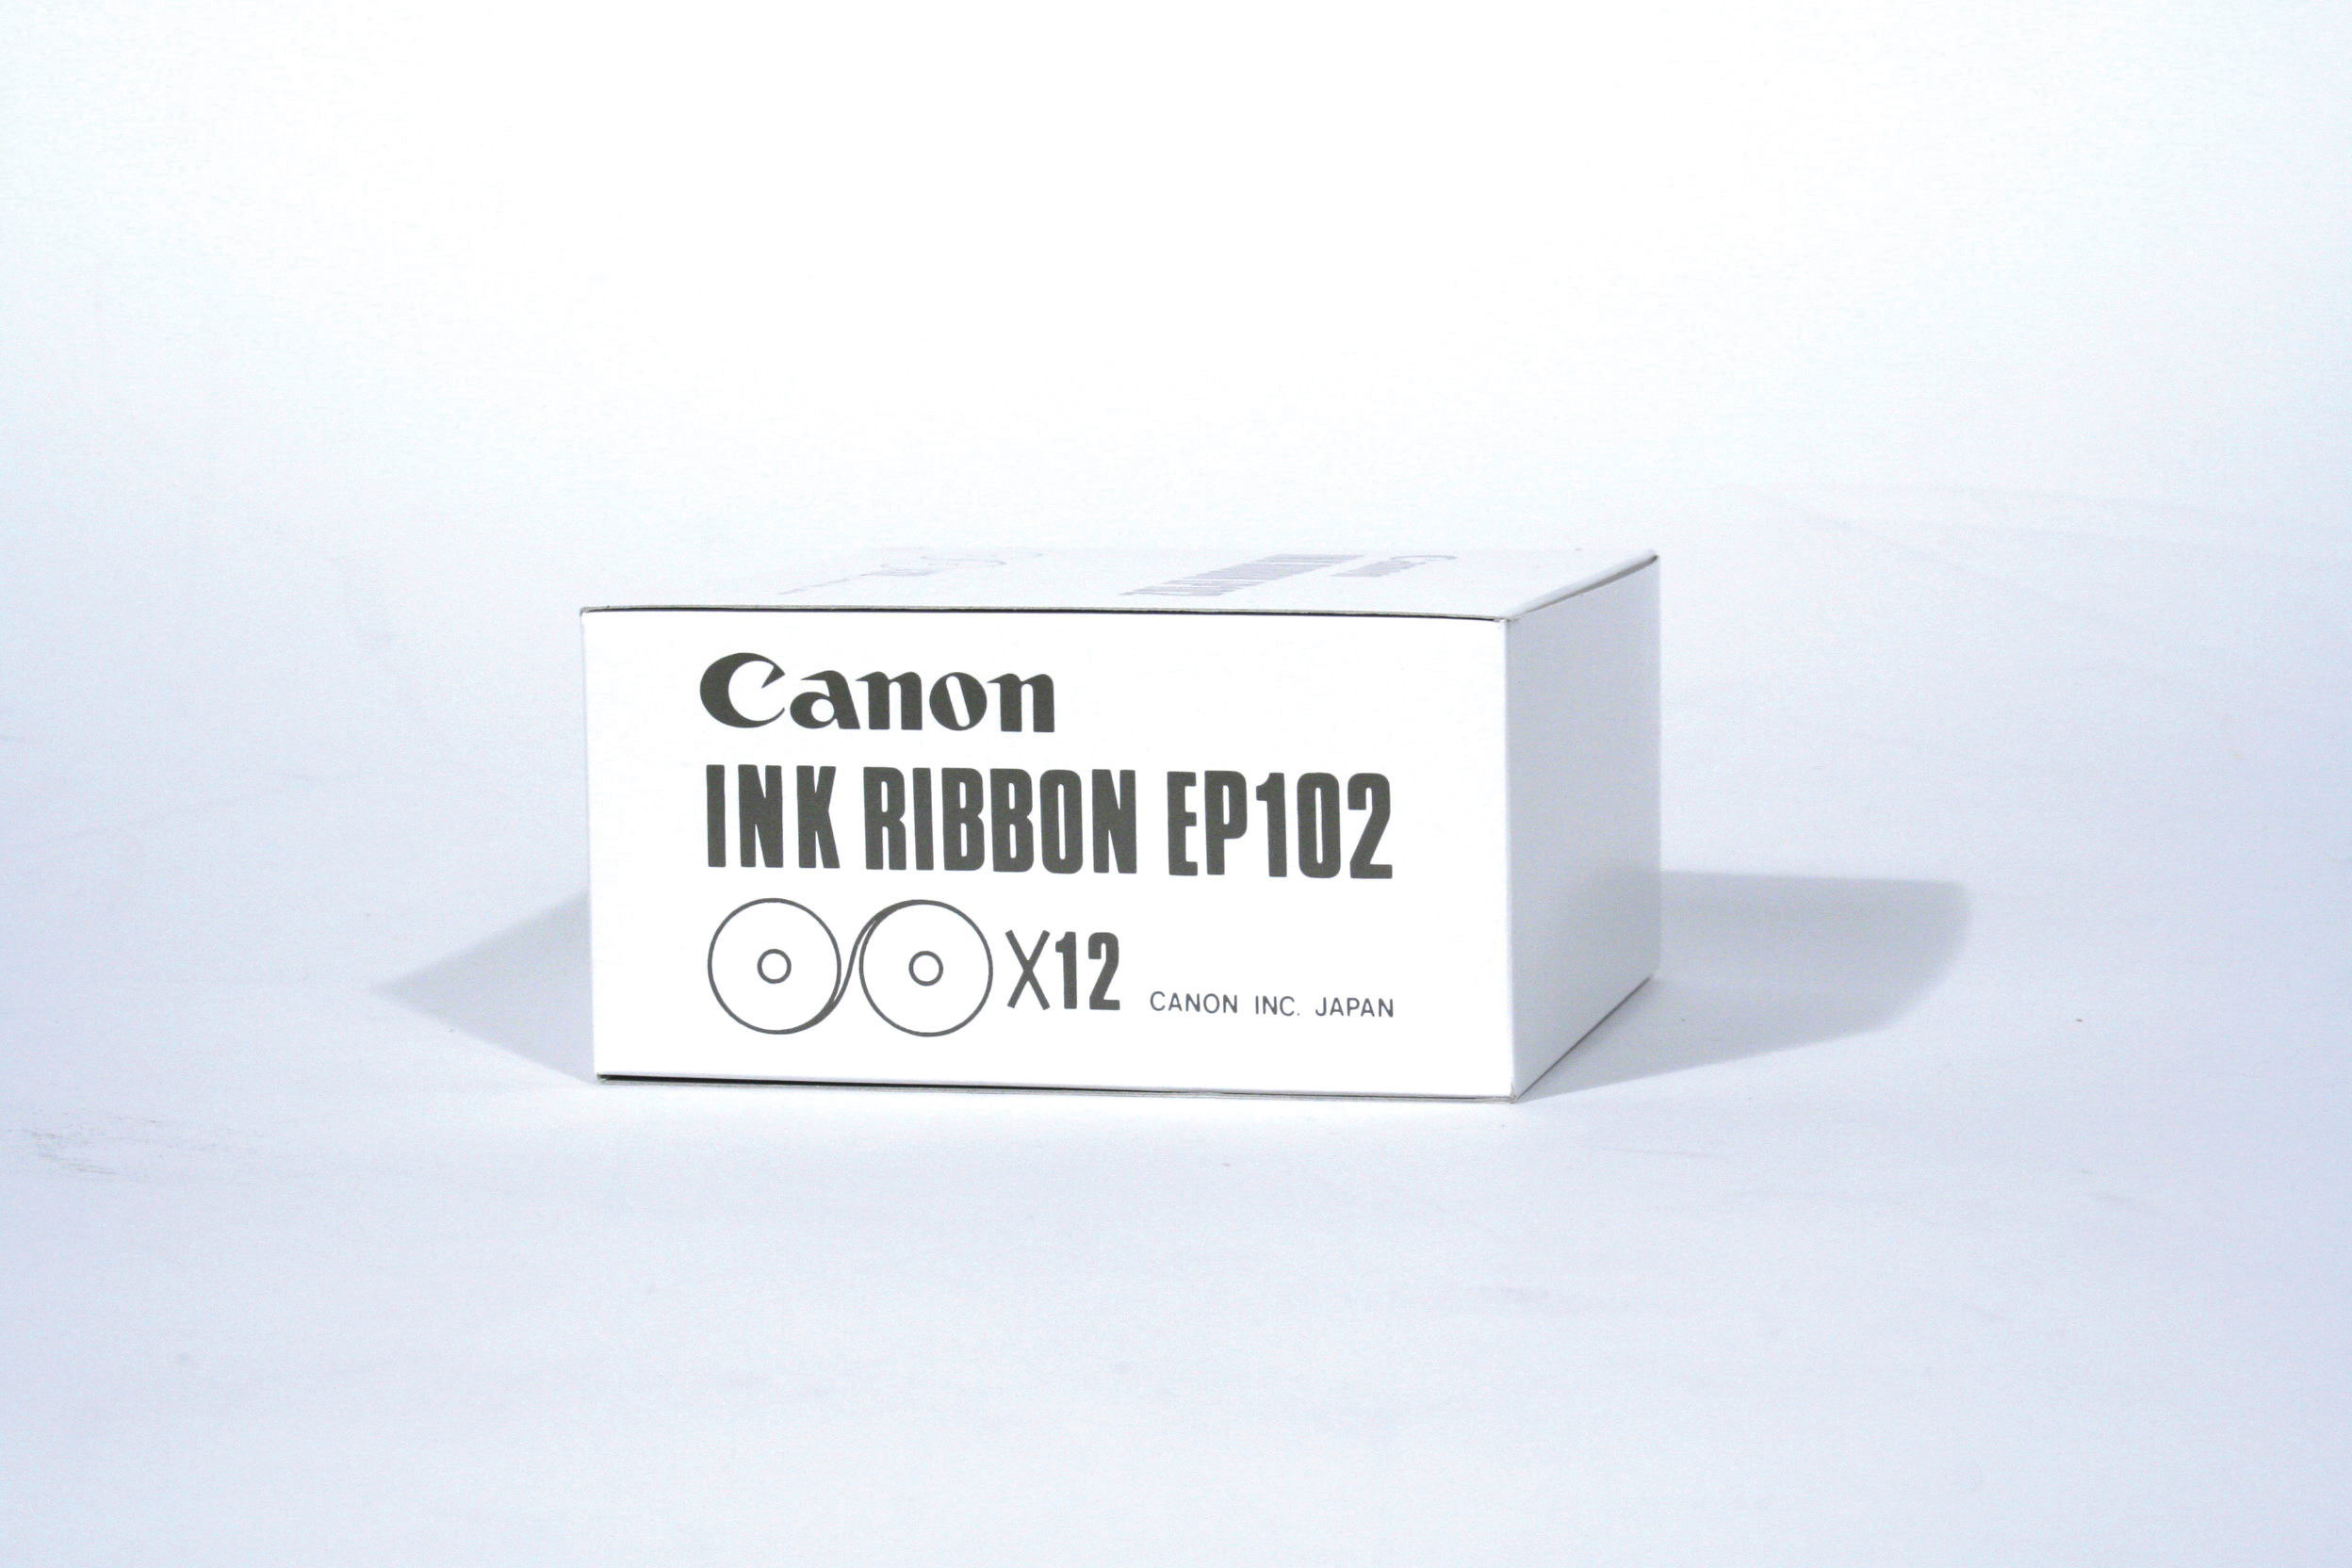 CANON Farbrolle Nylon schwarz/rot M310 EP 102 13mmx6m